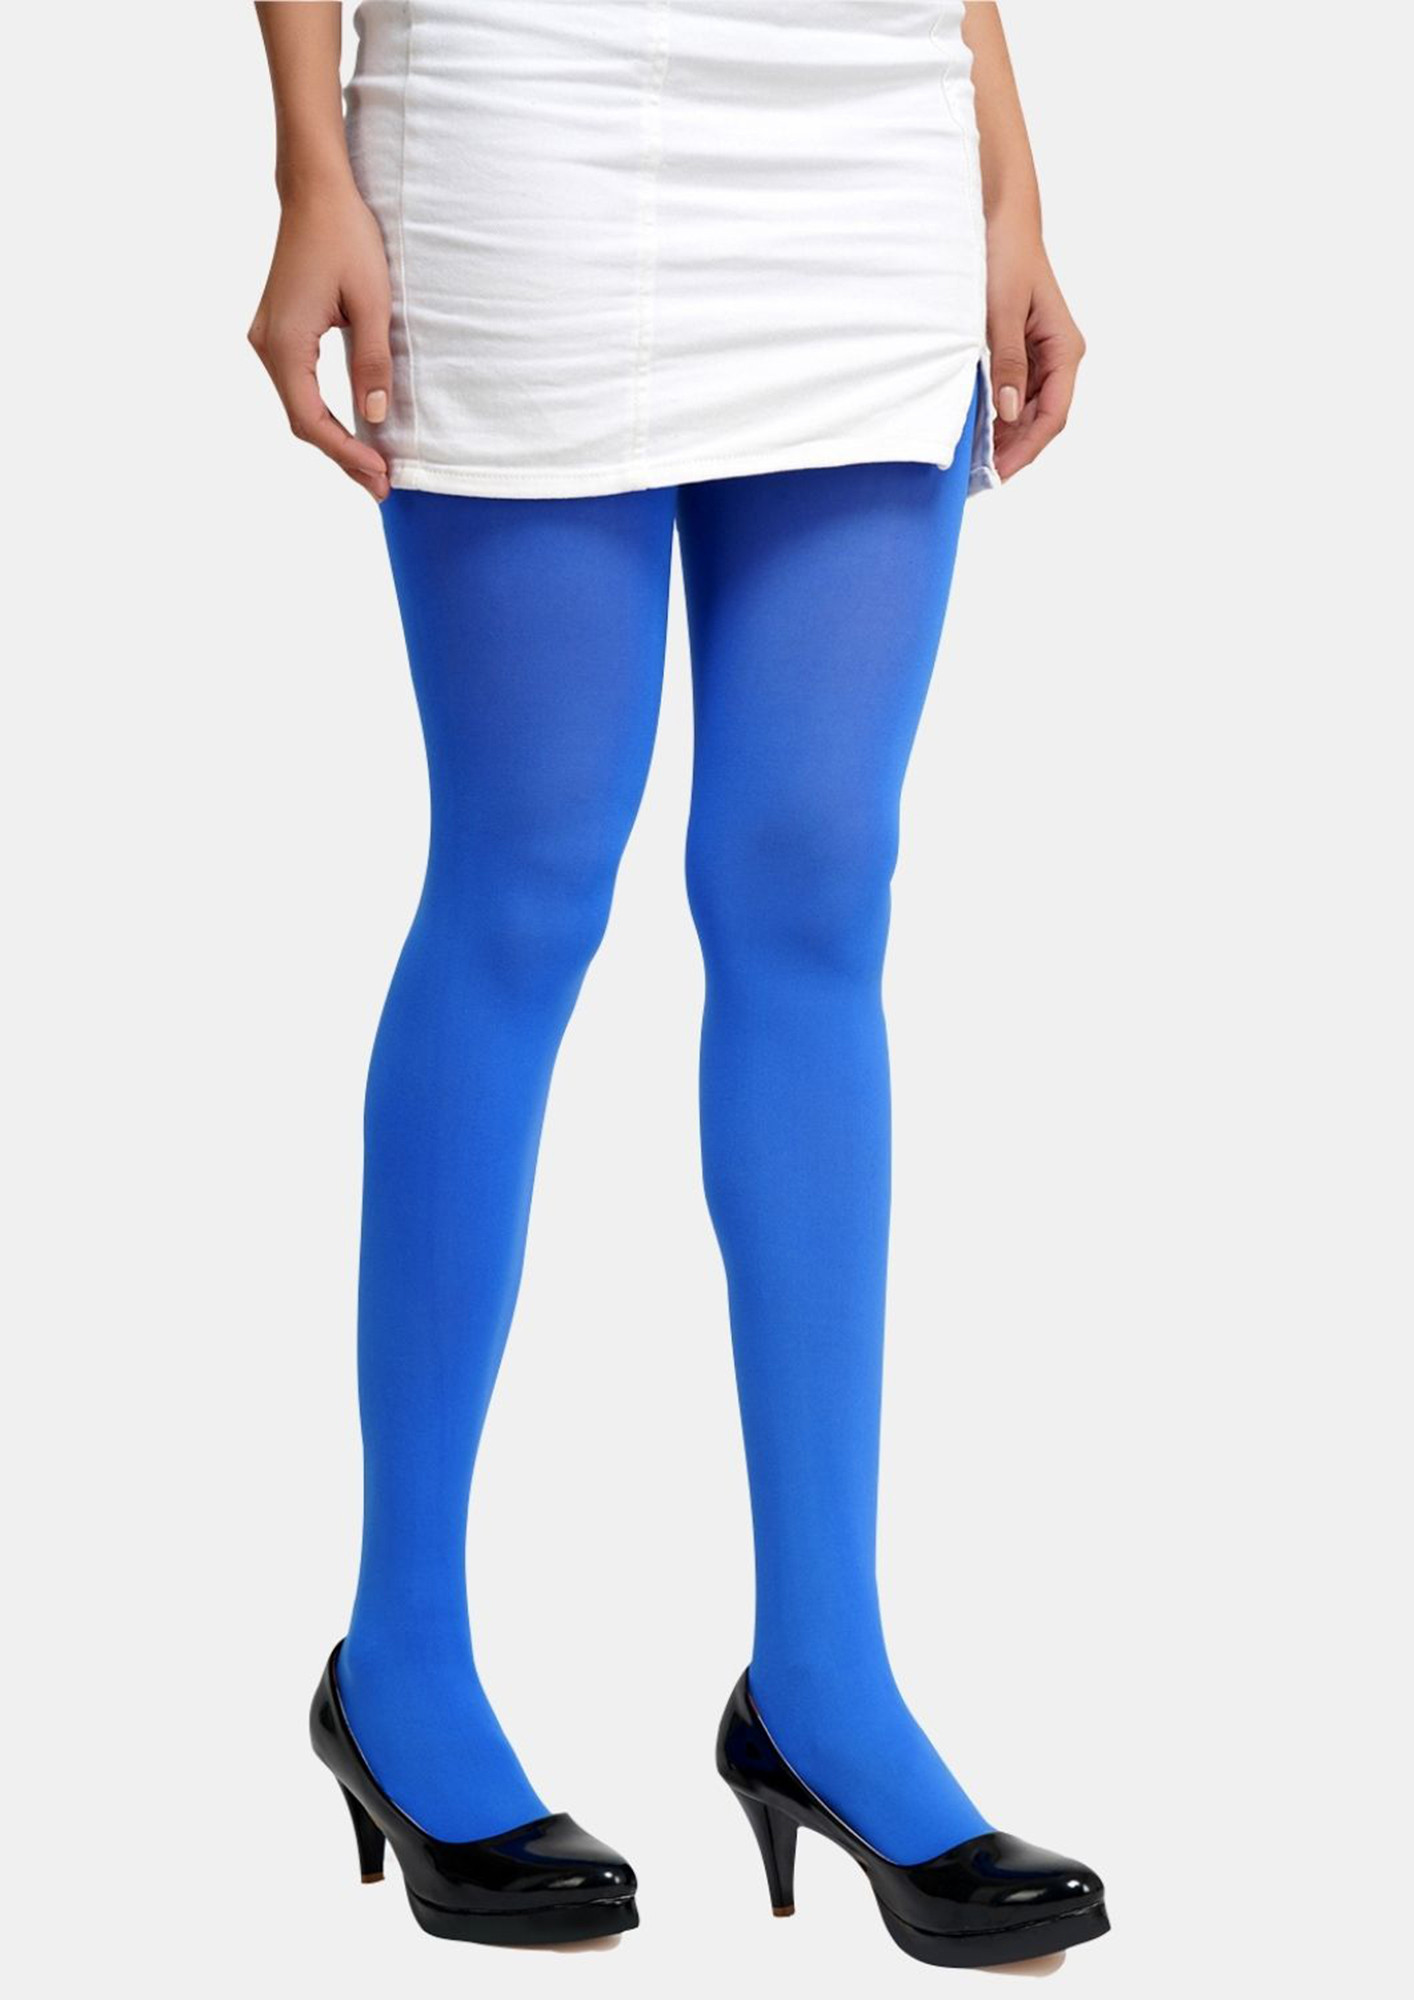 Buy NEXT2SKIN Women Nylon Opaque Pantyhose Stockings With Super